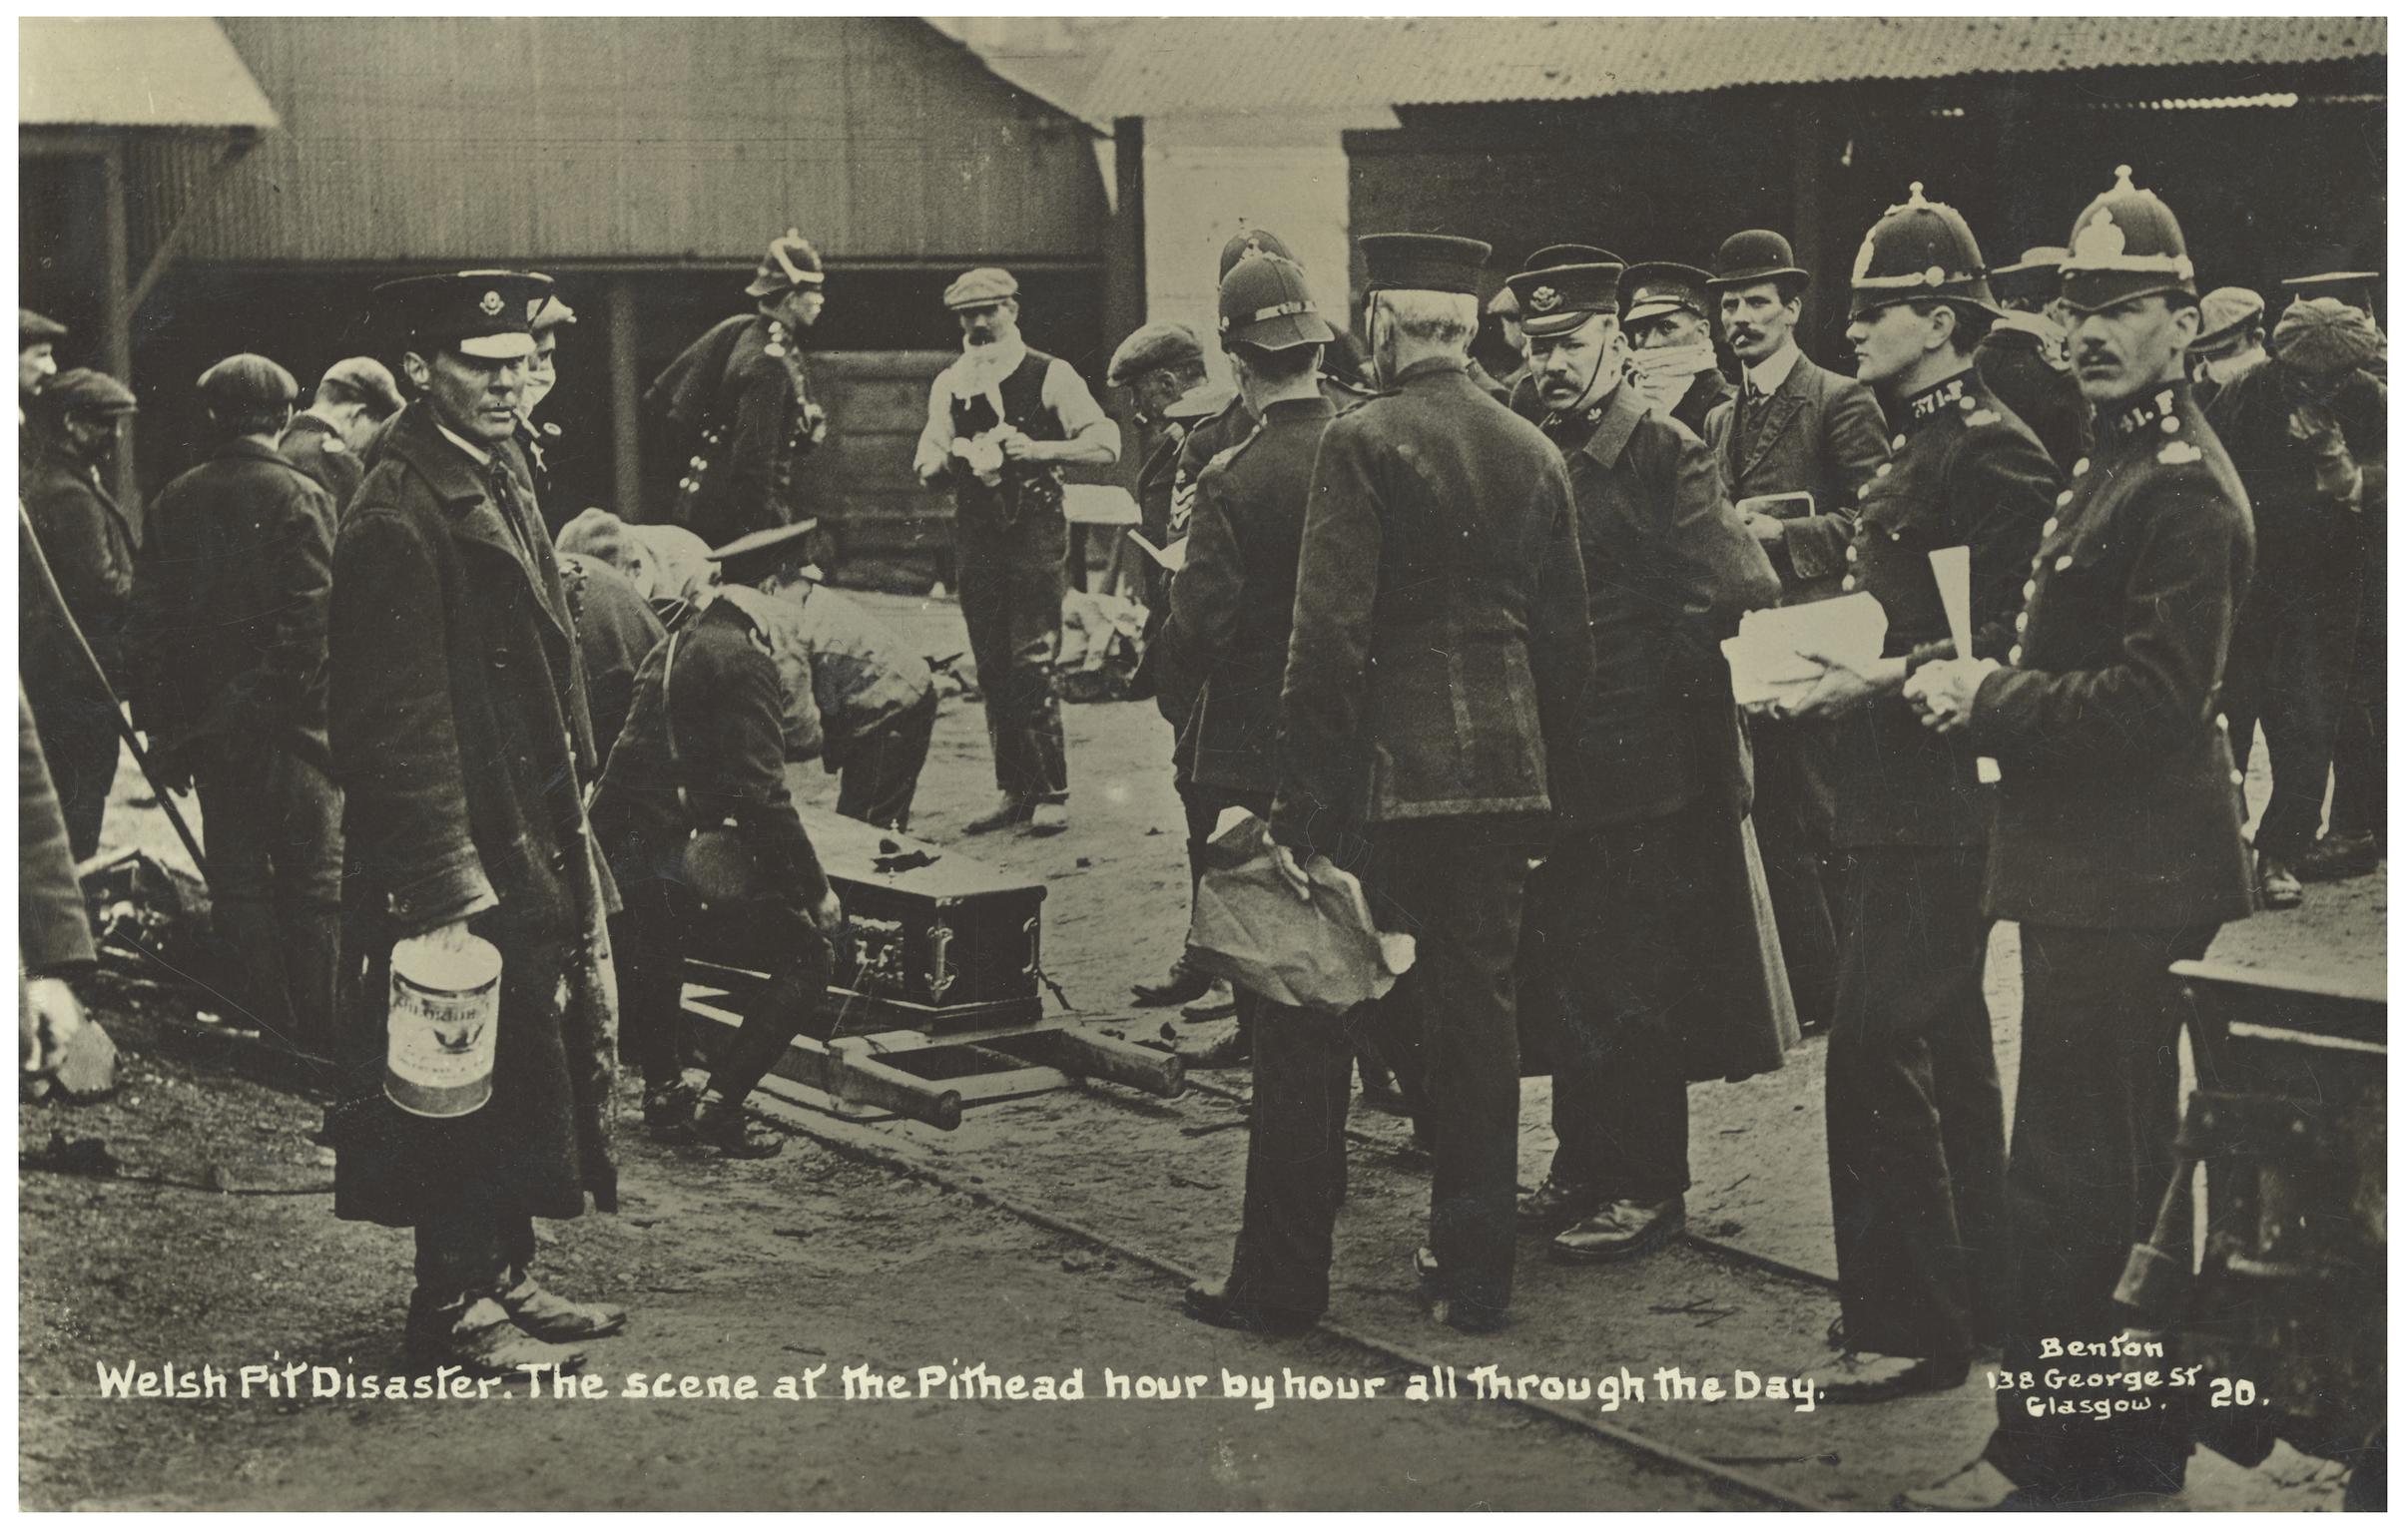 Senghenydd pit disaster, 1913, photo